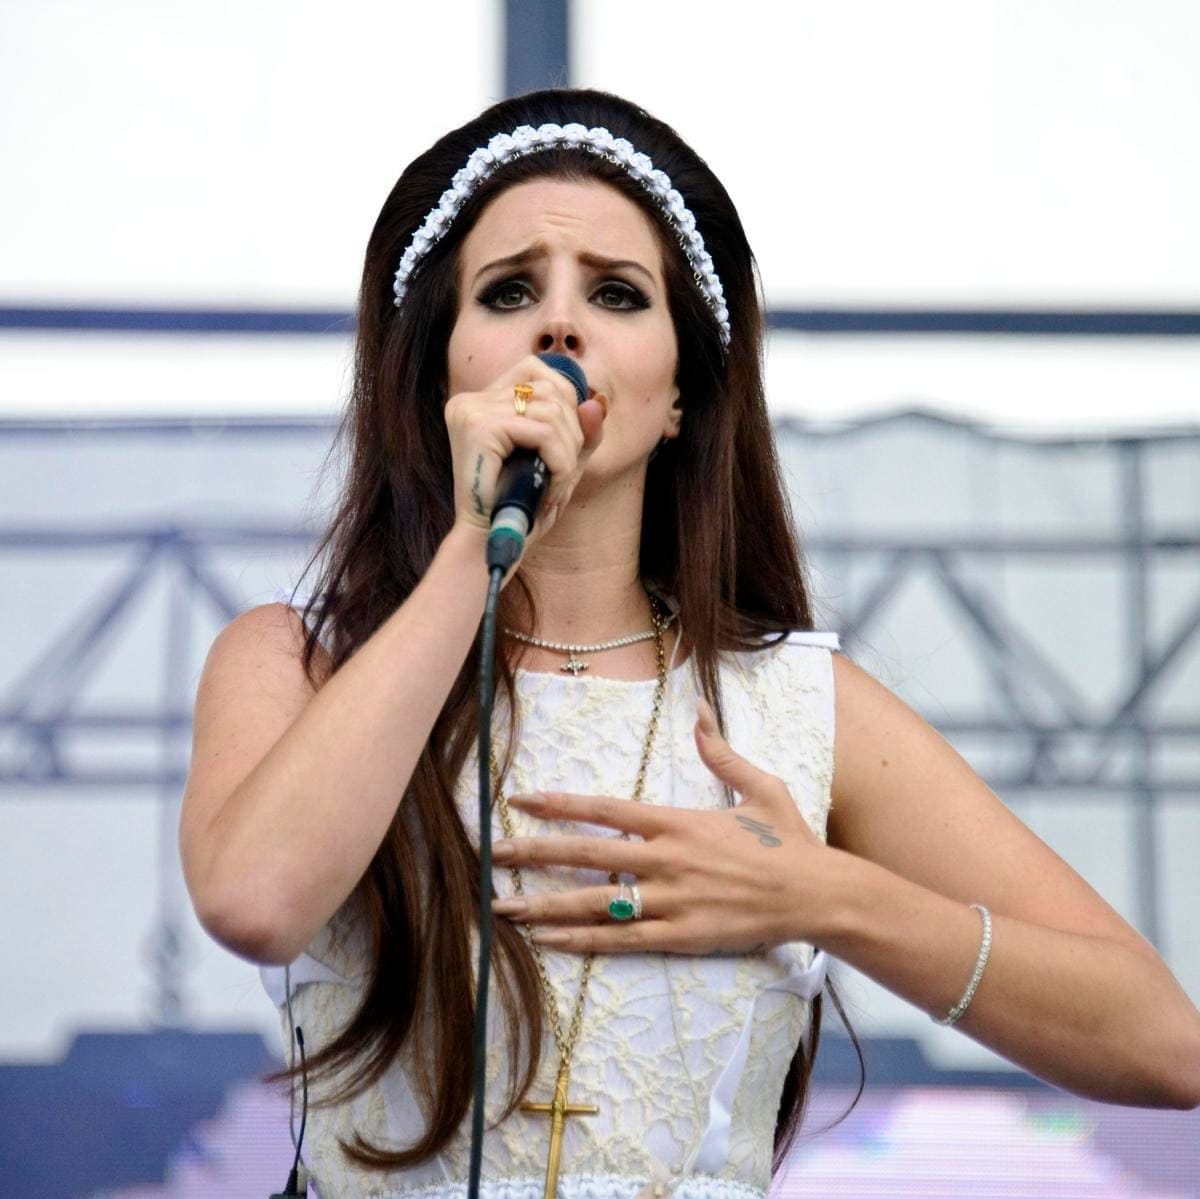 US singer, Lana Del Rey, performs on stage.